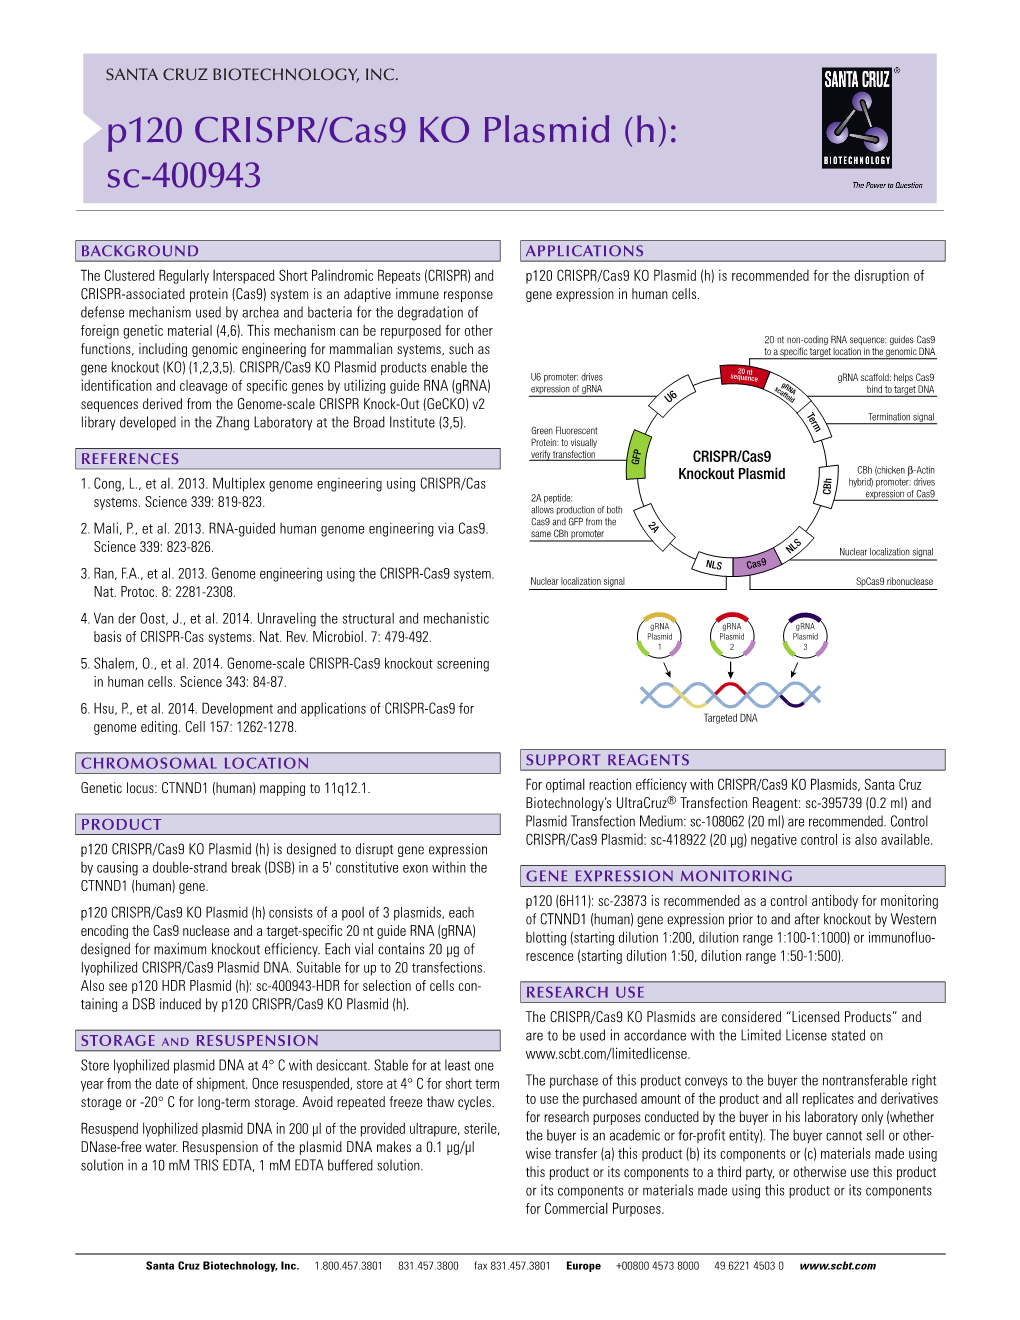 P120 CRISPR/Cas9 KO Plasmid (H): Sc-400943